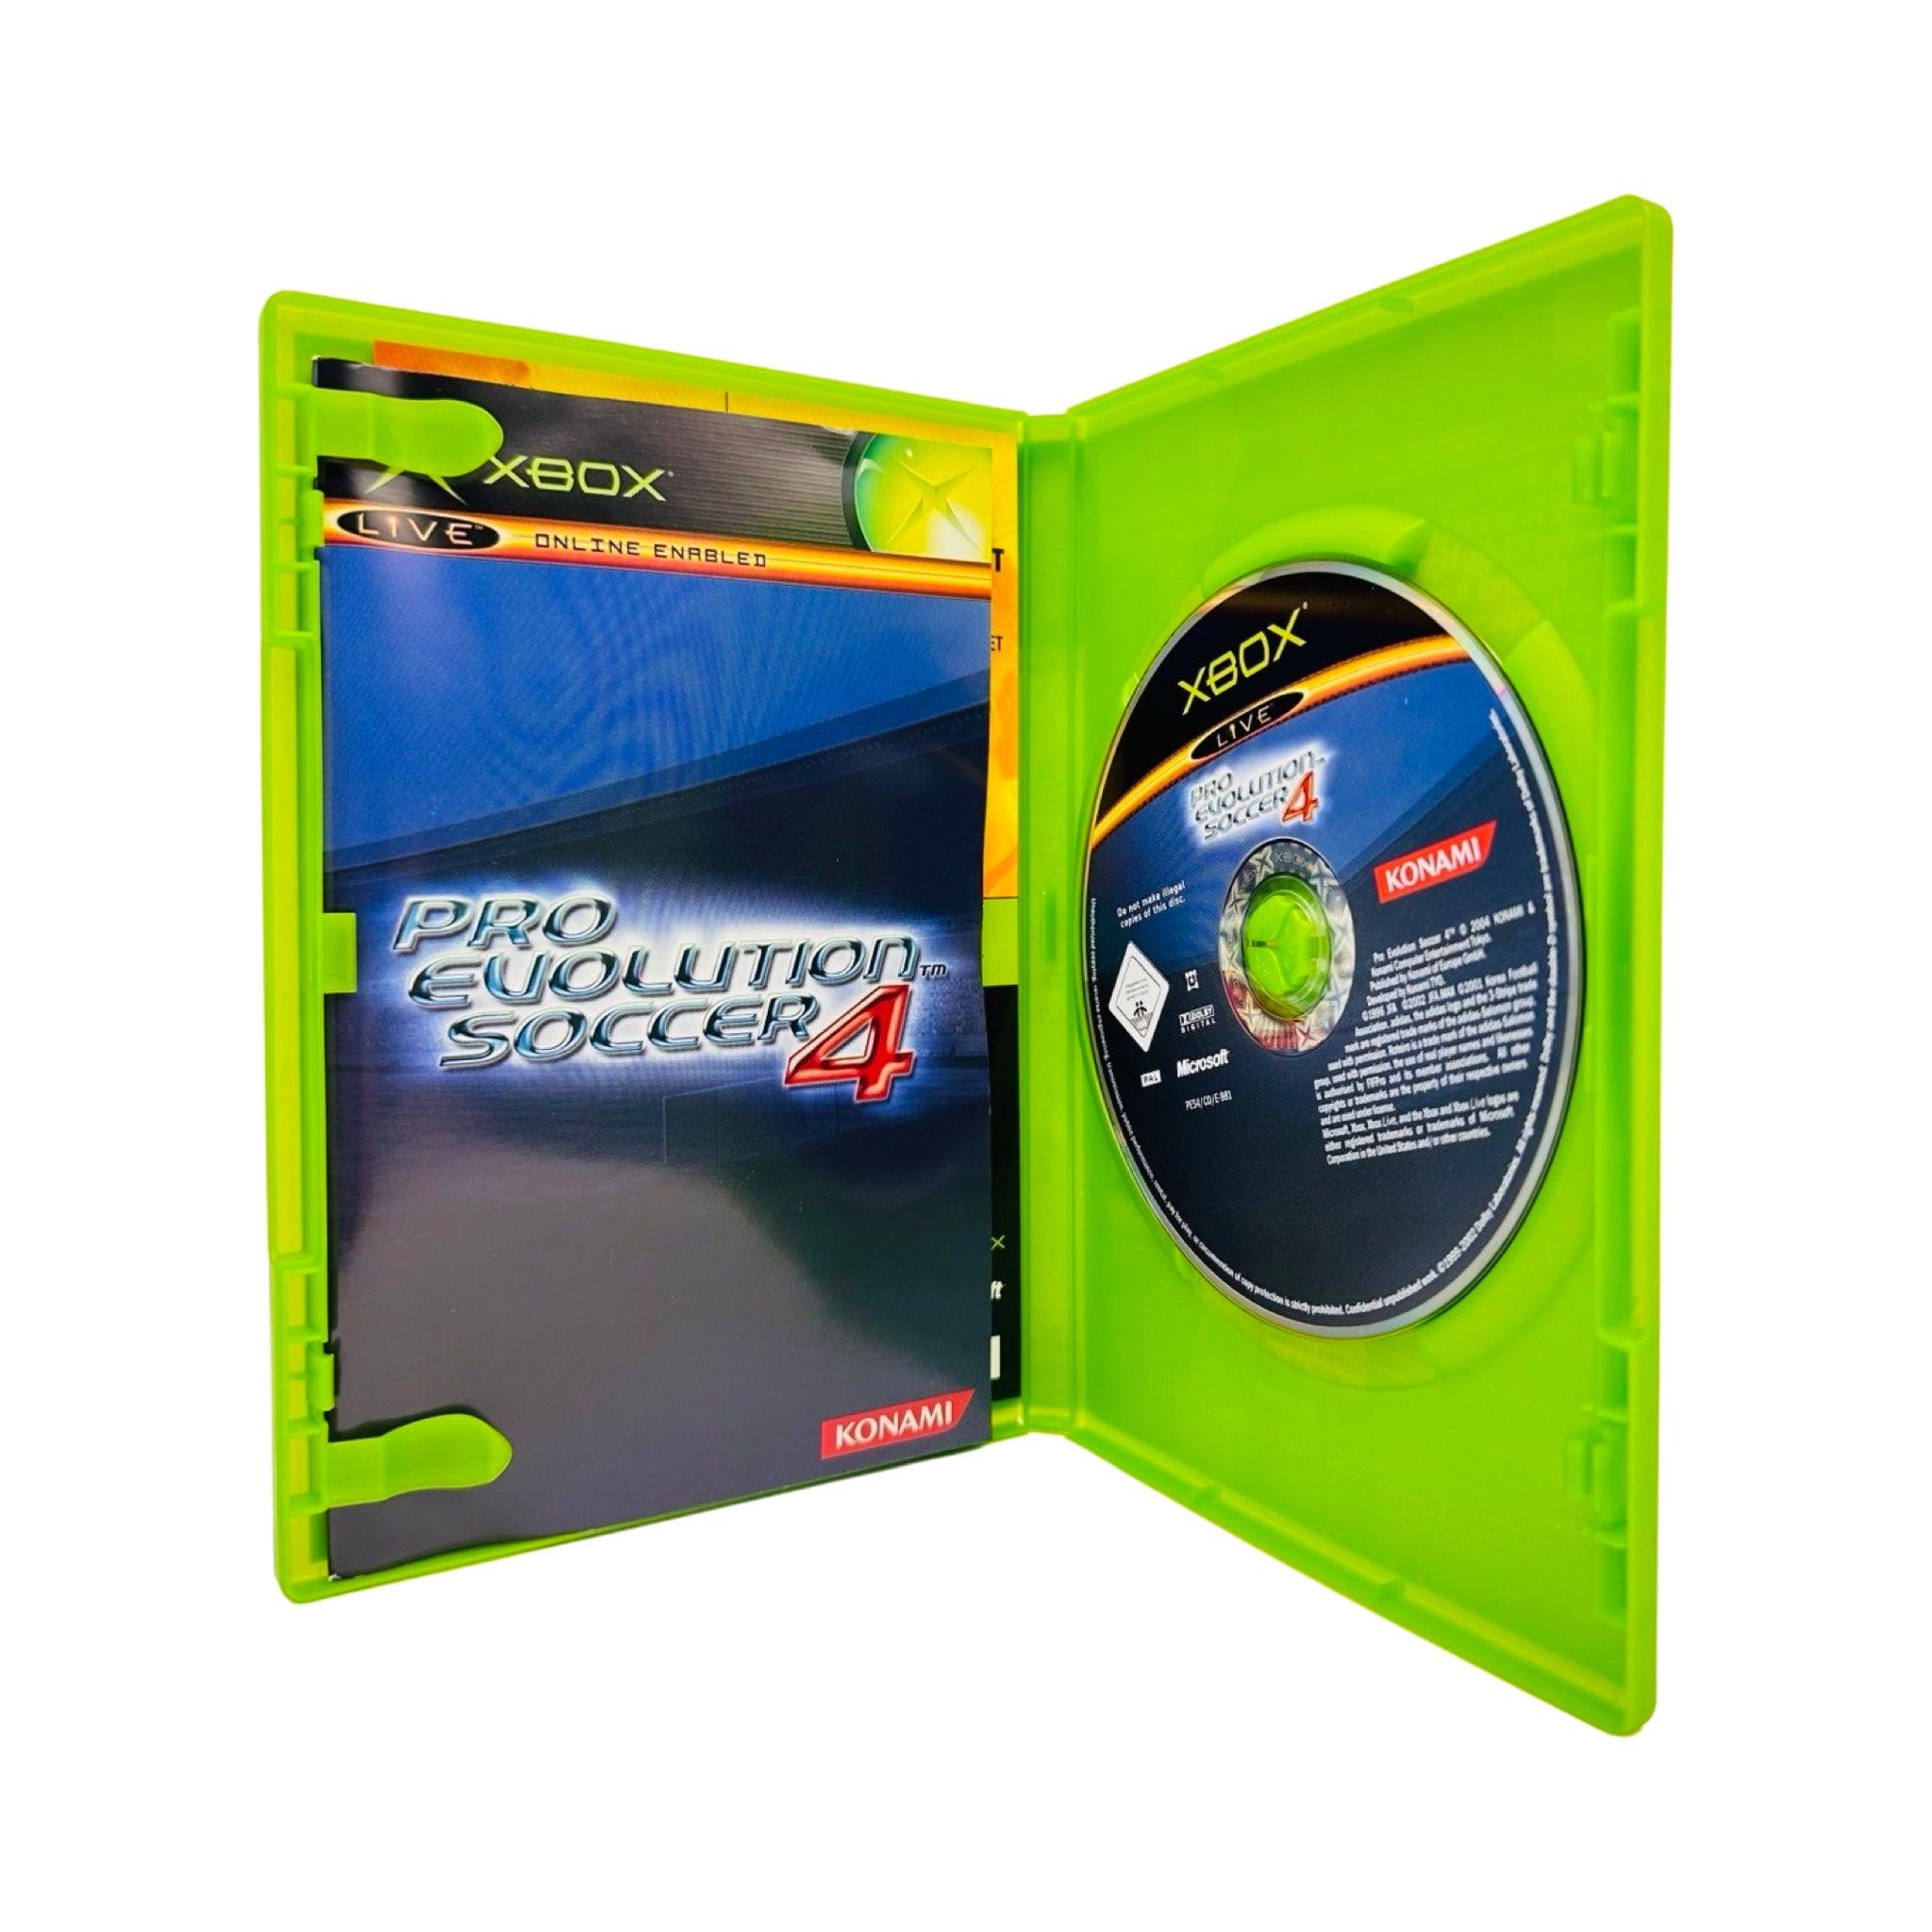 Xbox: Pro Evolution Soccer 4 - RetroGaming.No